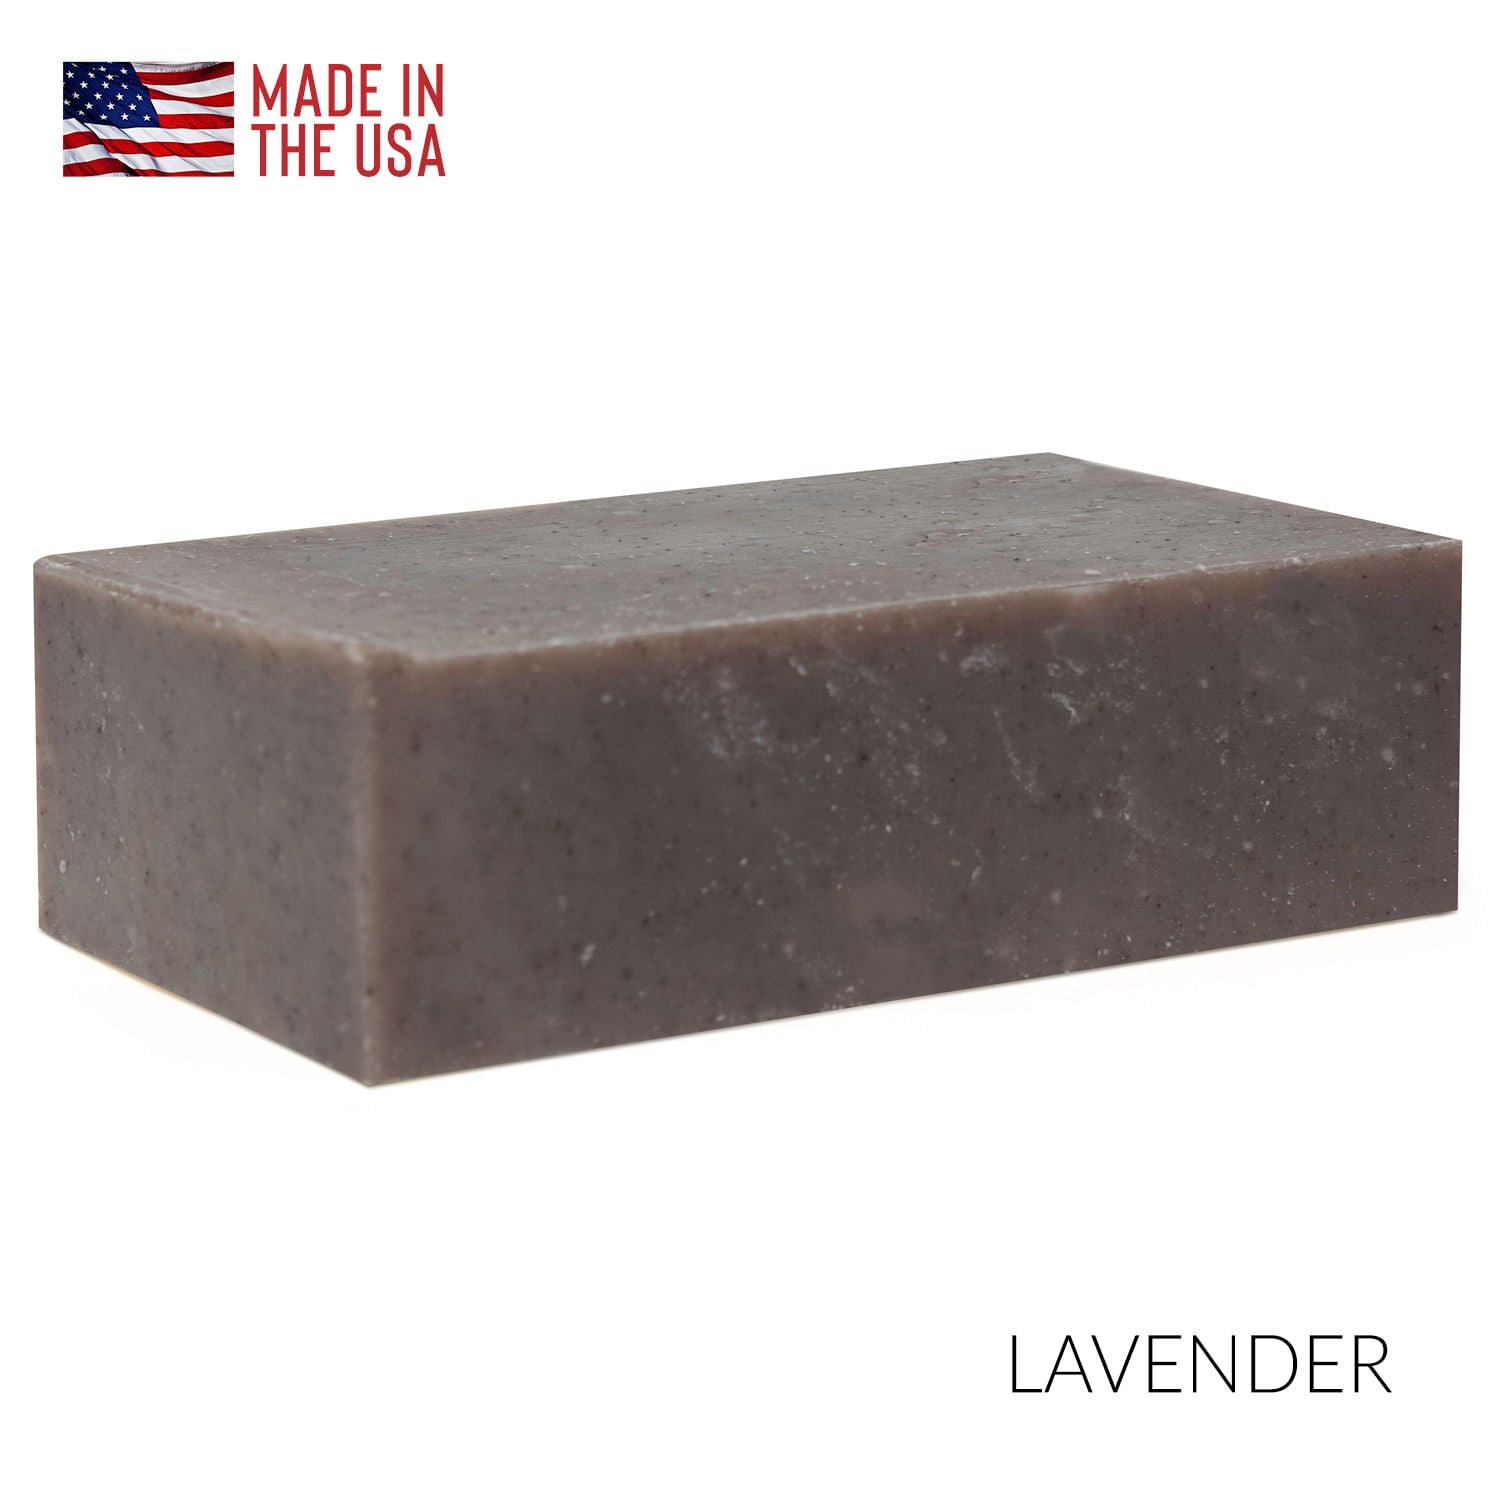 Lavender Bar soap